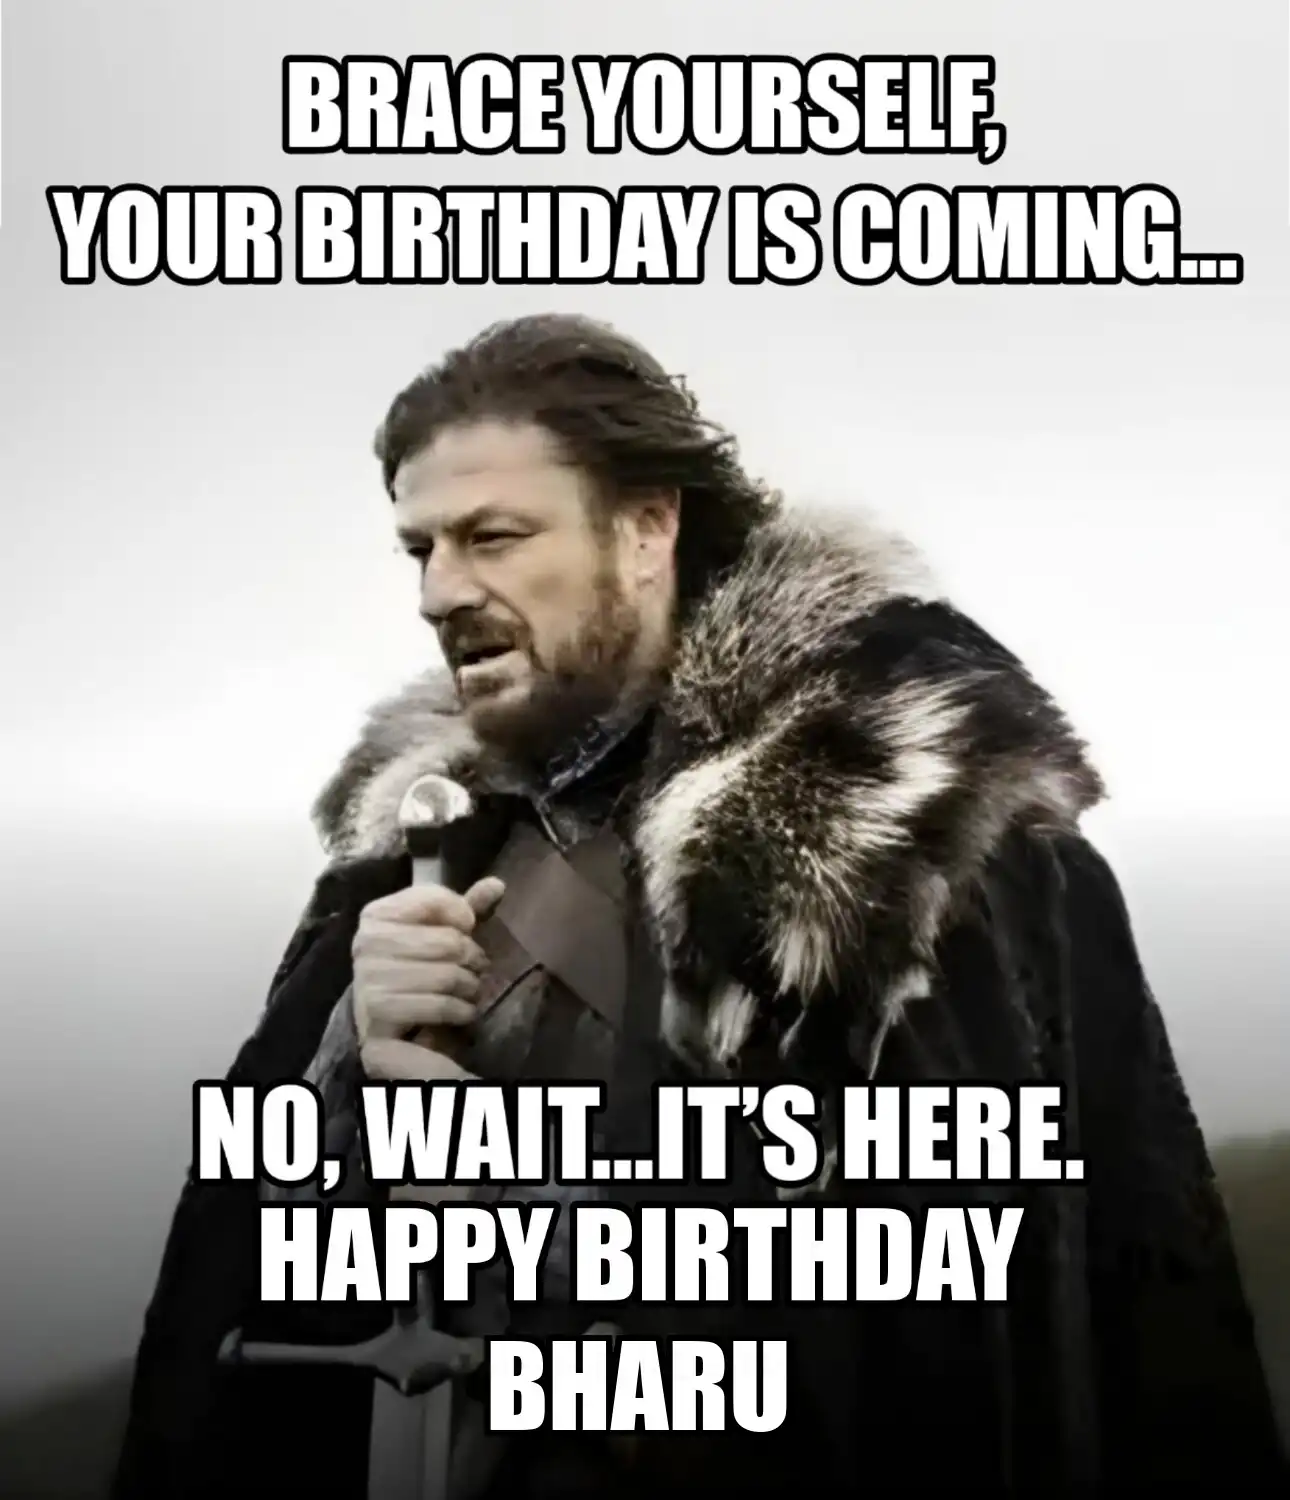 Happy Birthday Bharu Brace Yourself Your Birthday Is Coming Meme